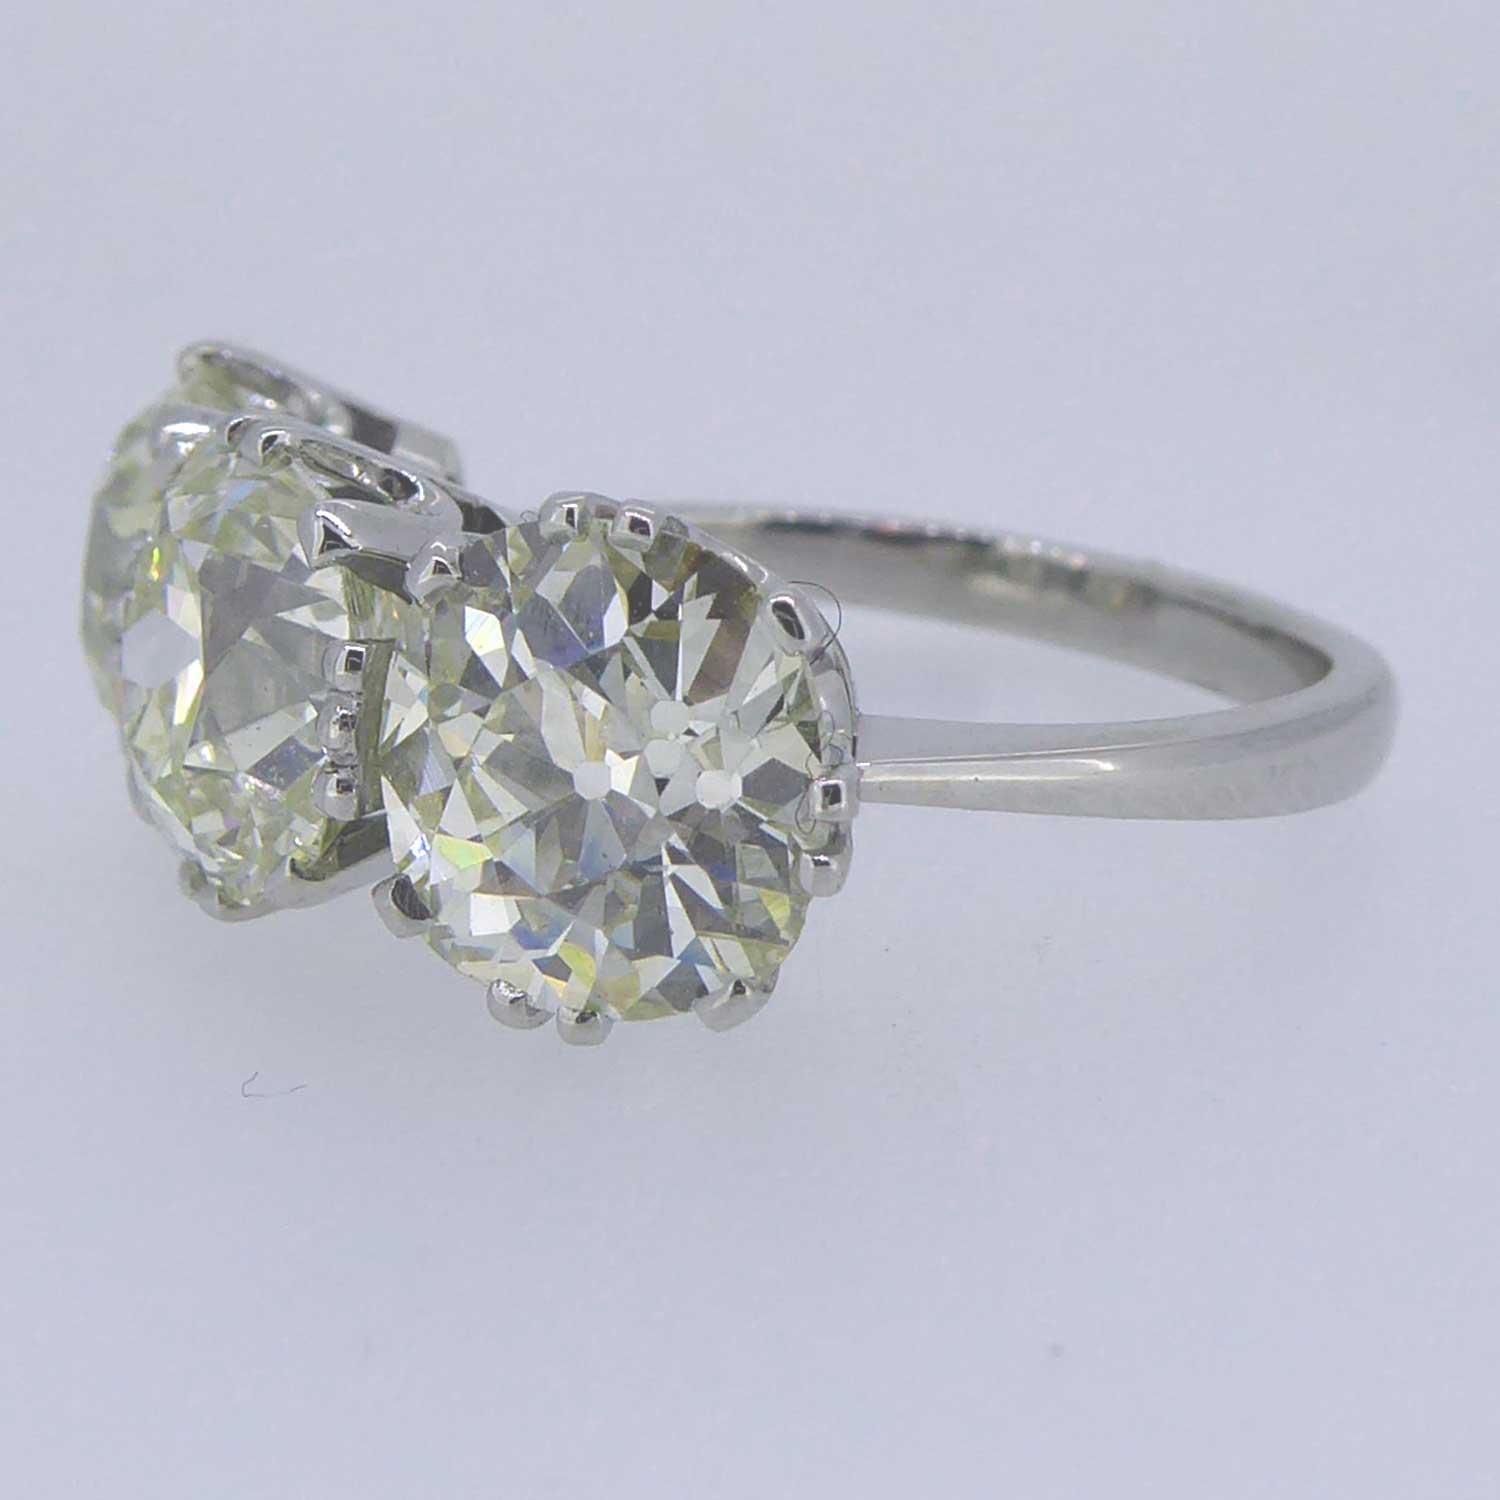 Women's or Men's Victorian Old Cut Diamond Ring, 7.39 Carat, Remounted in Platinum Setting